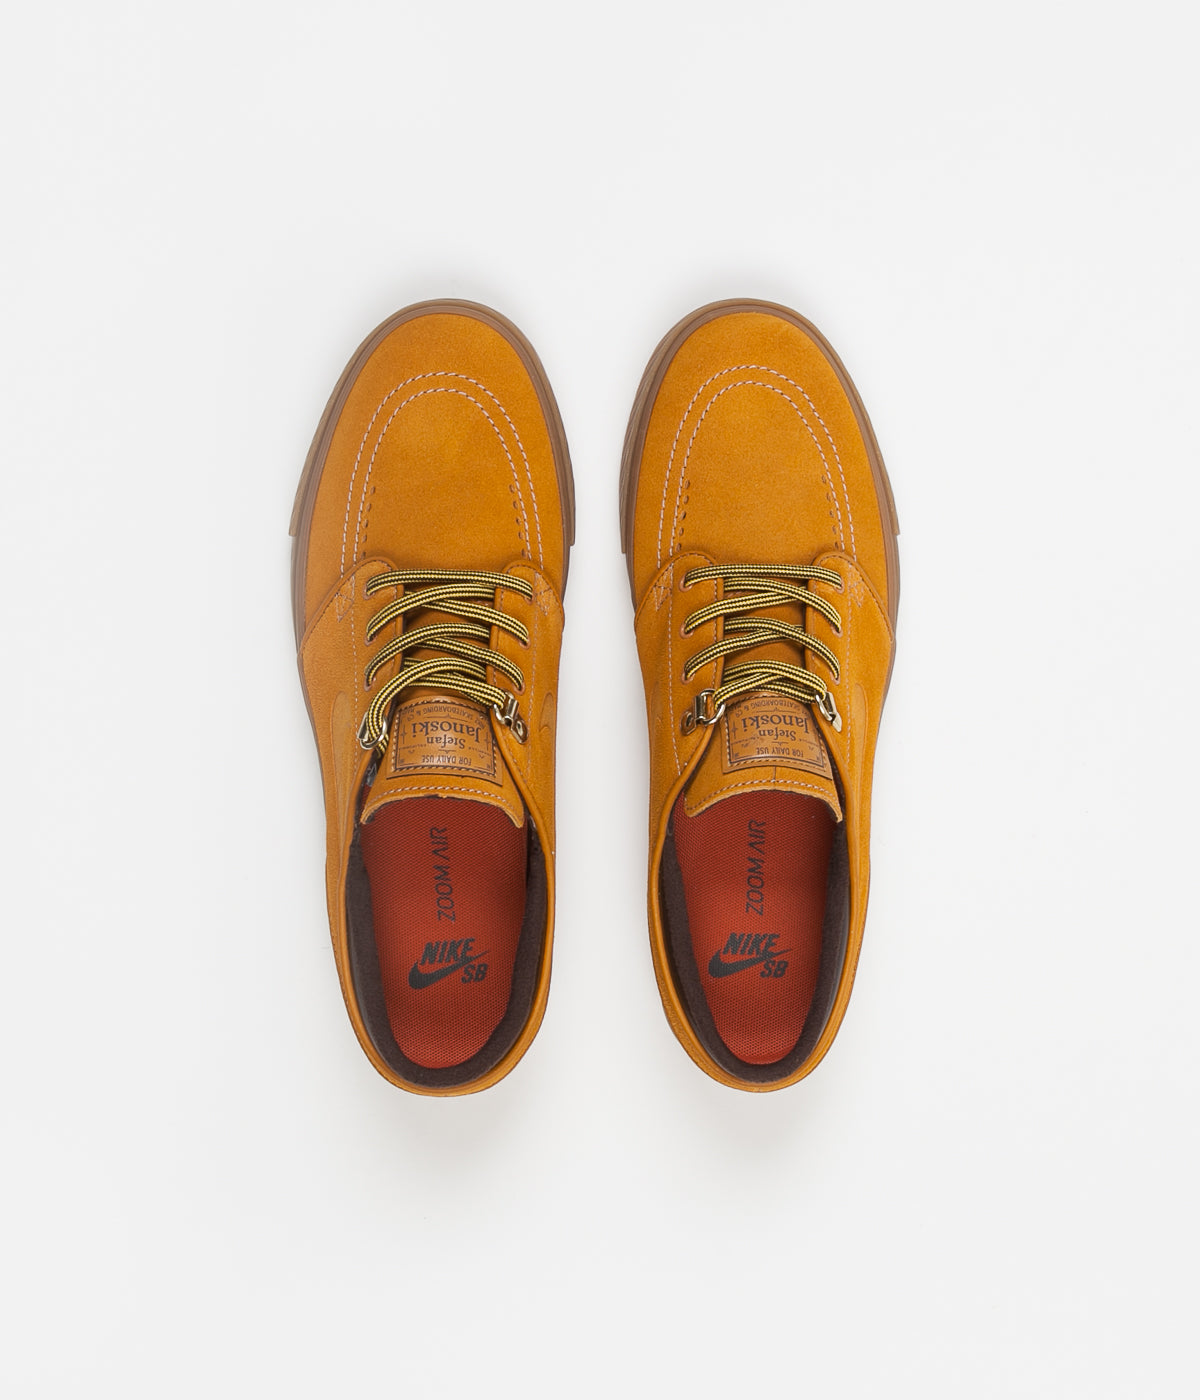 nike sb janoski premium bronze & gum suede skate shoes